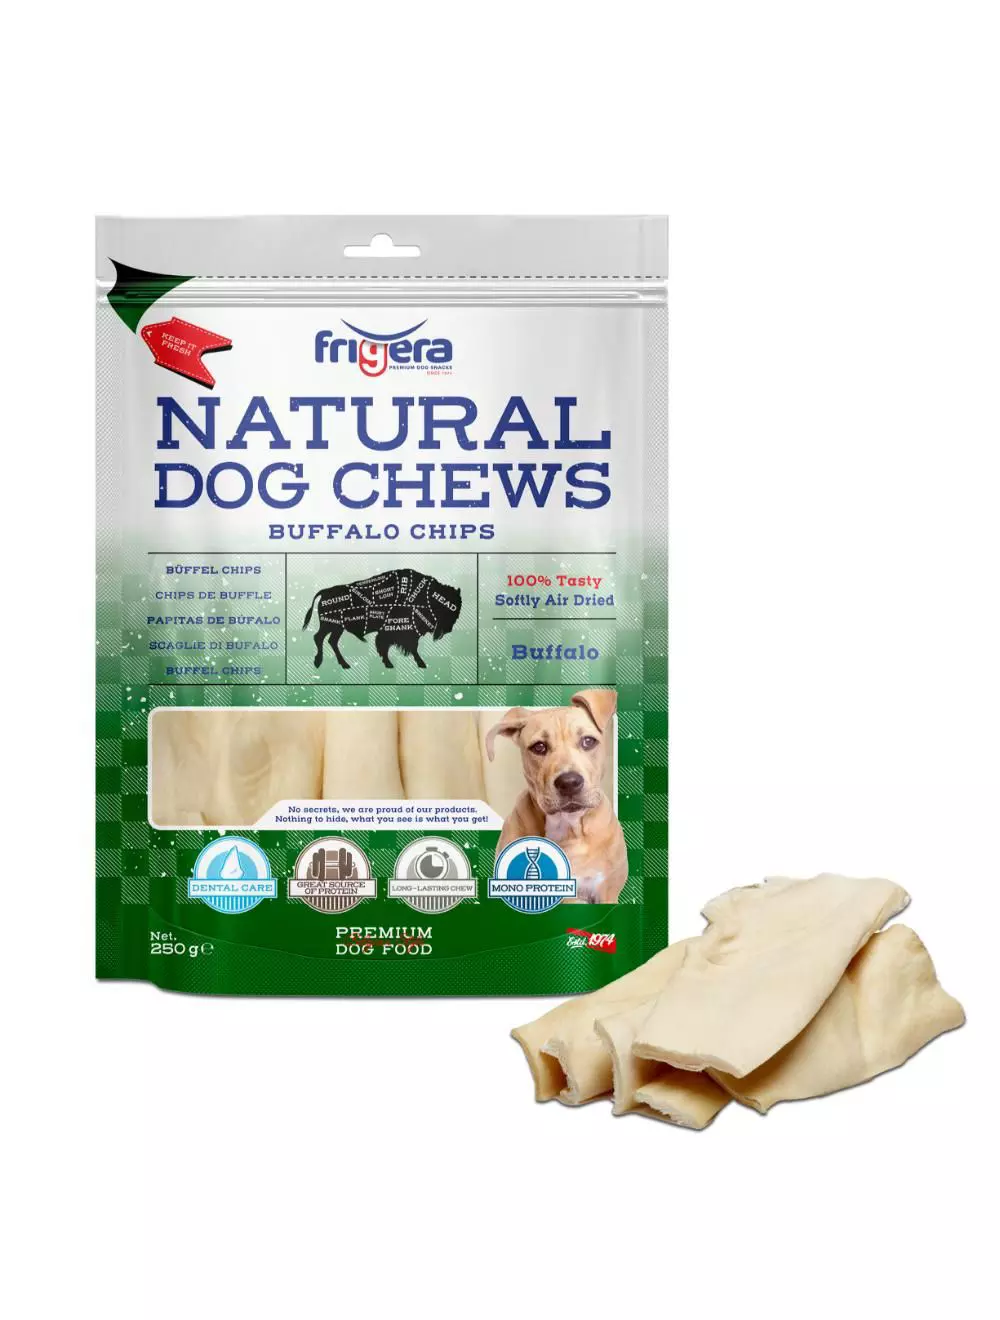 Frigera Natural Dog Chews Buffalo Chips